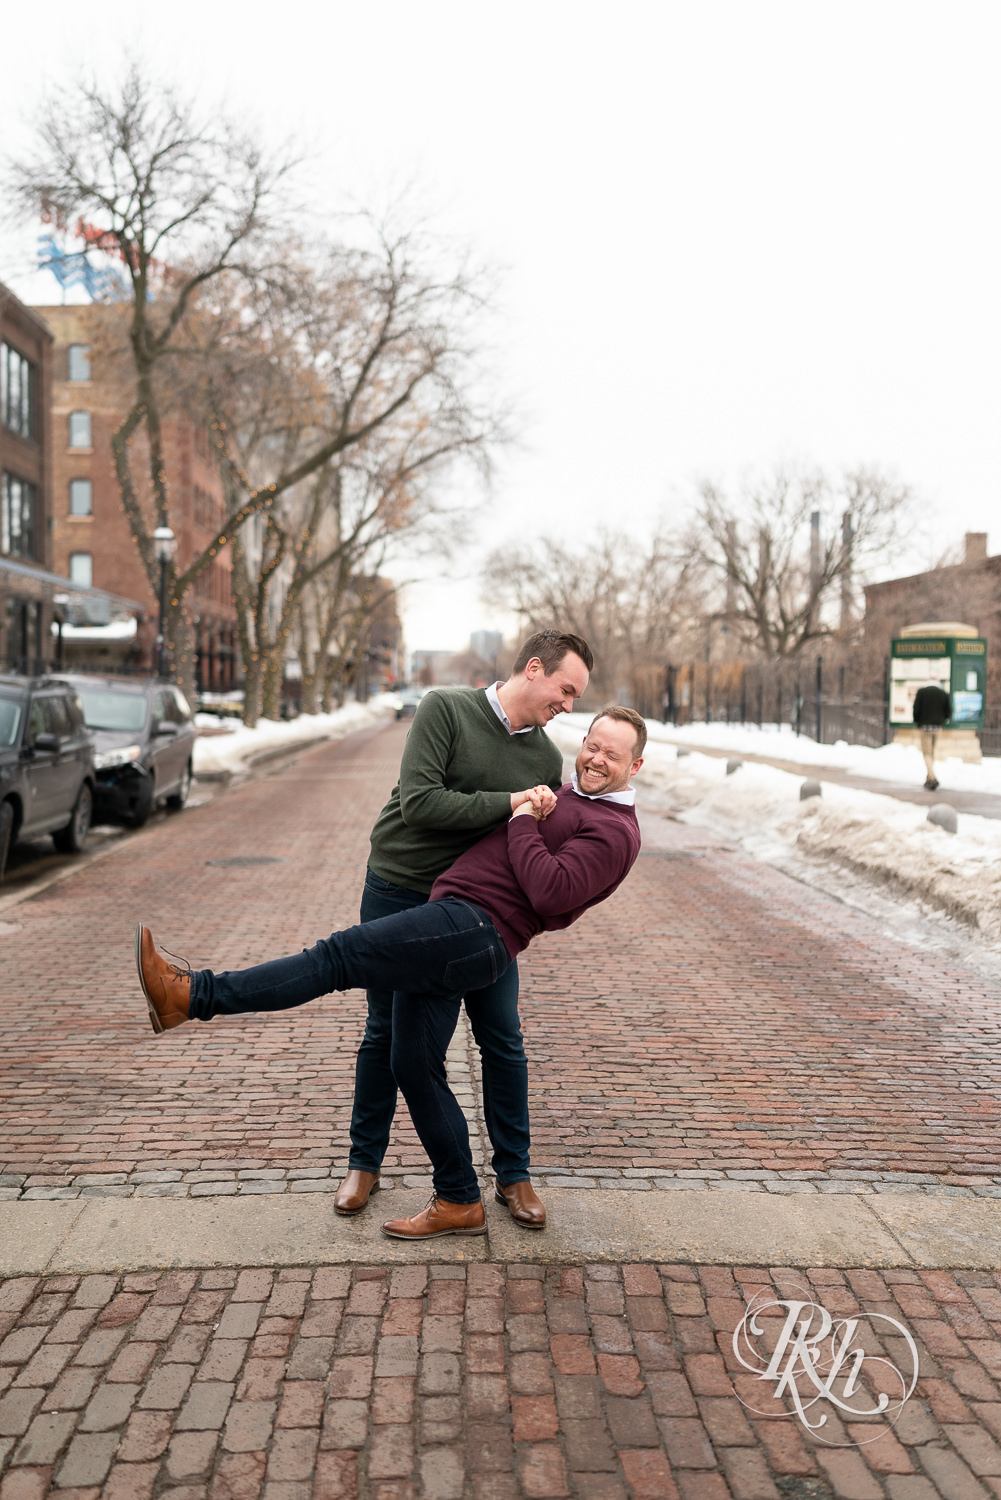 Gay men smile on cobblestone street during the winter in Minneapolis, Minnesota.